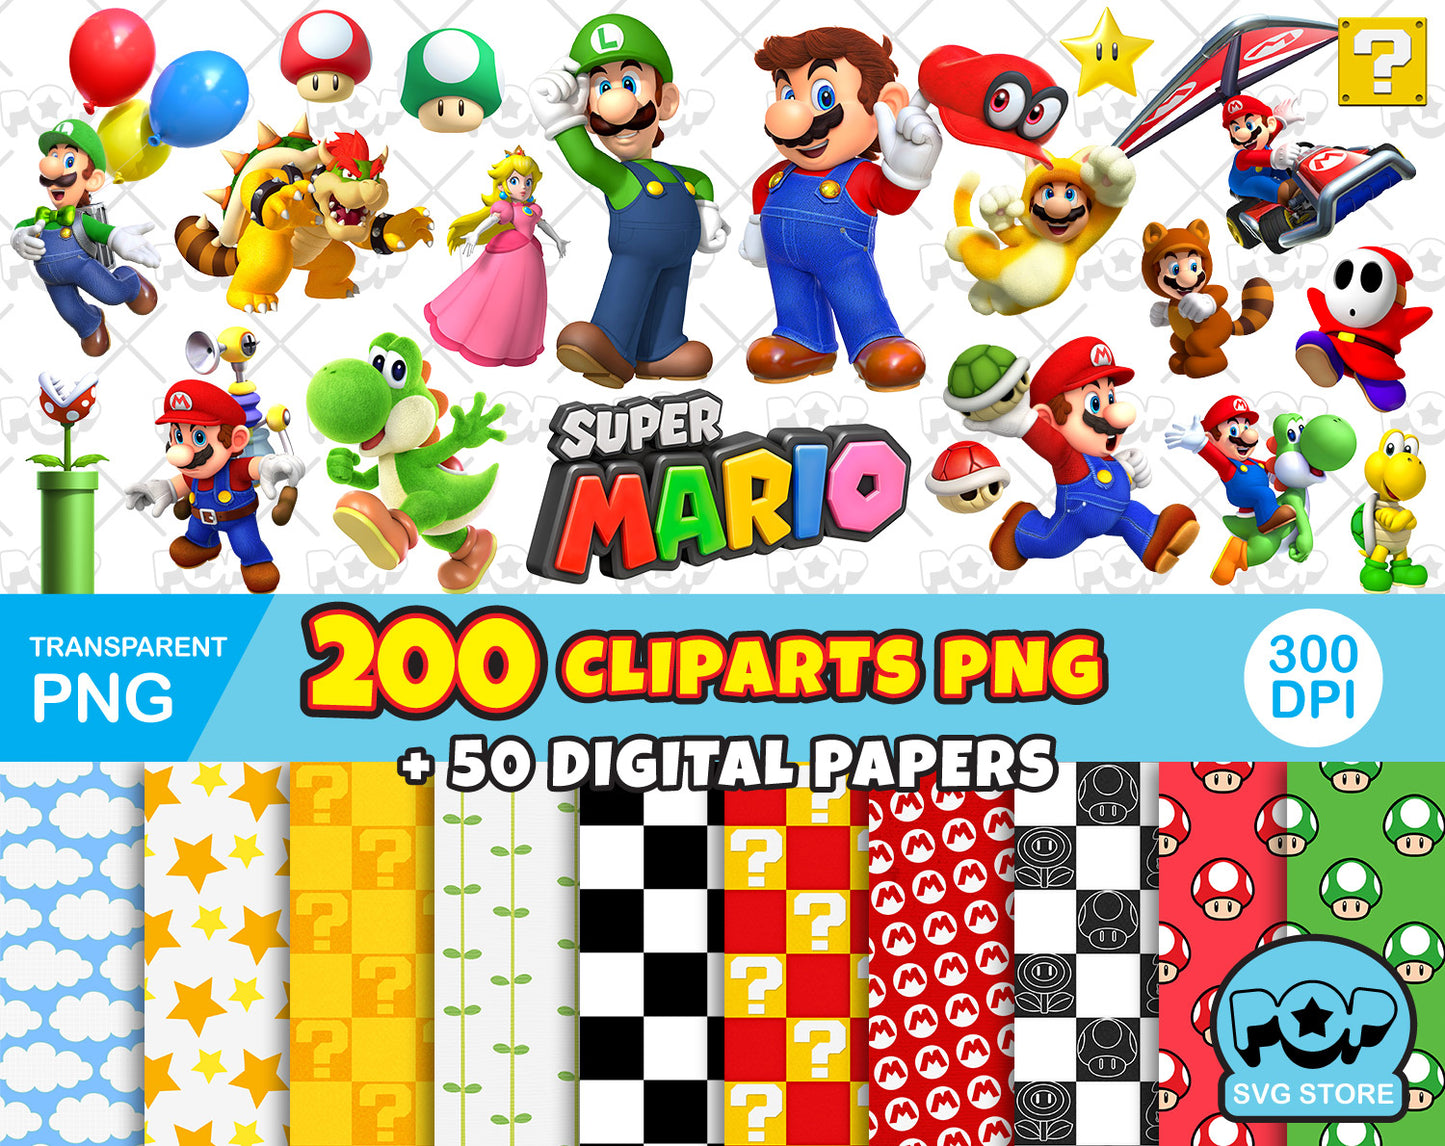 Super Mario clipart PNG, transparent PNG, designs for decoration / sublimation, instant download